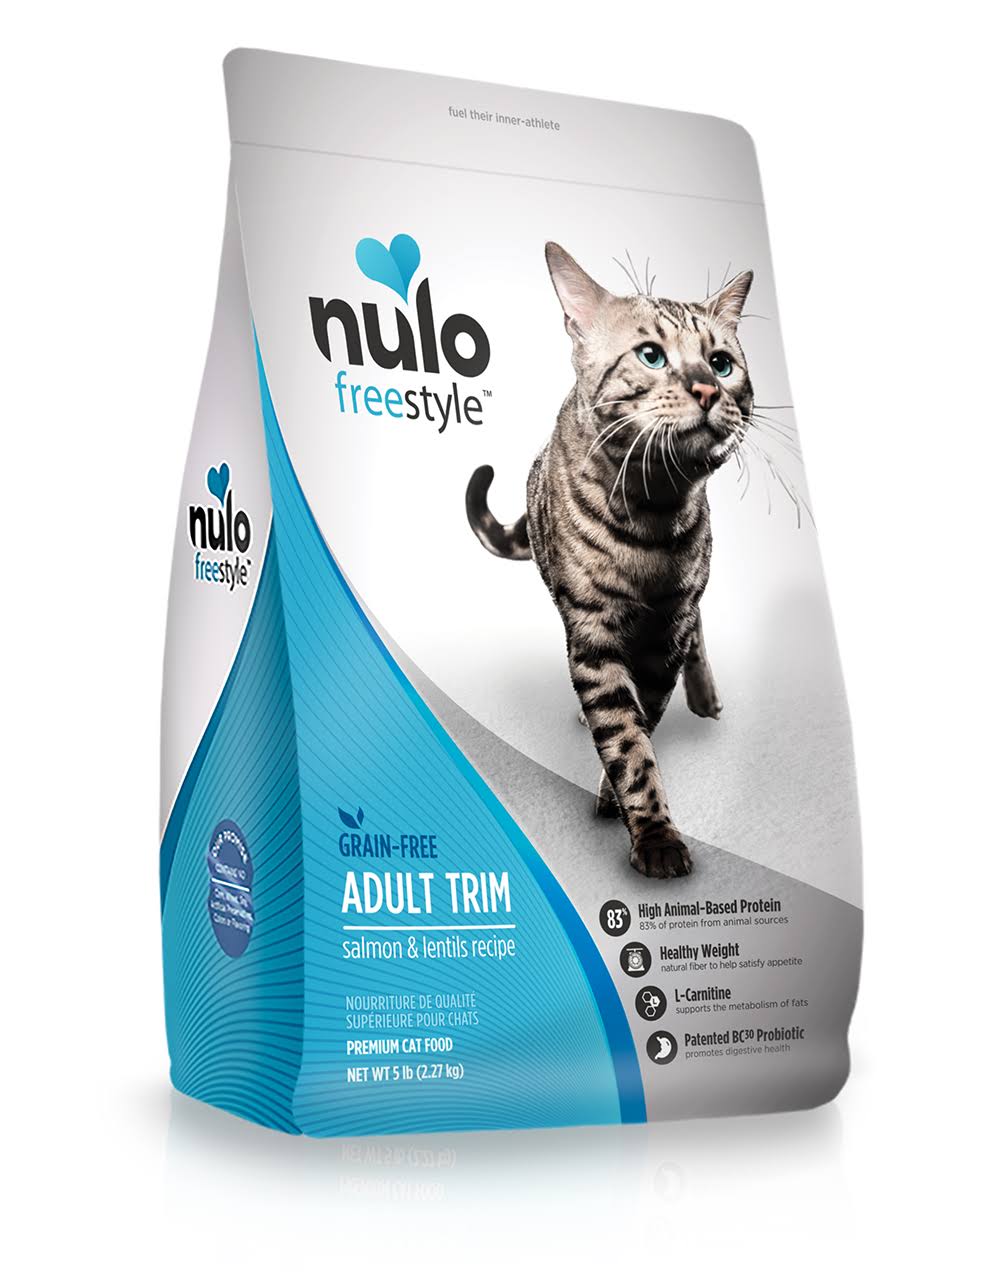 Nulo Freestyle Adult Trim Cat Grain-Free Salmon & Lentils Dry Cat Food 2lb